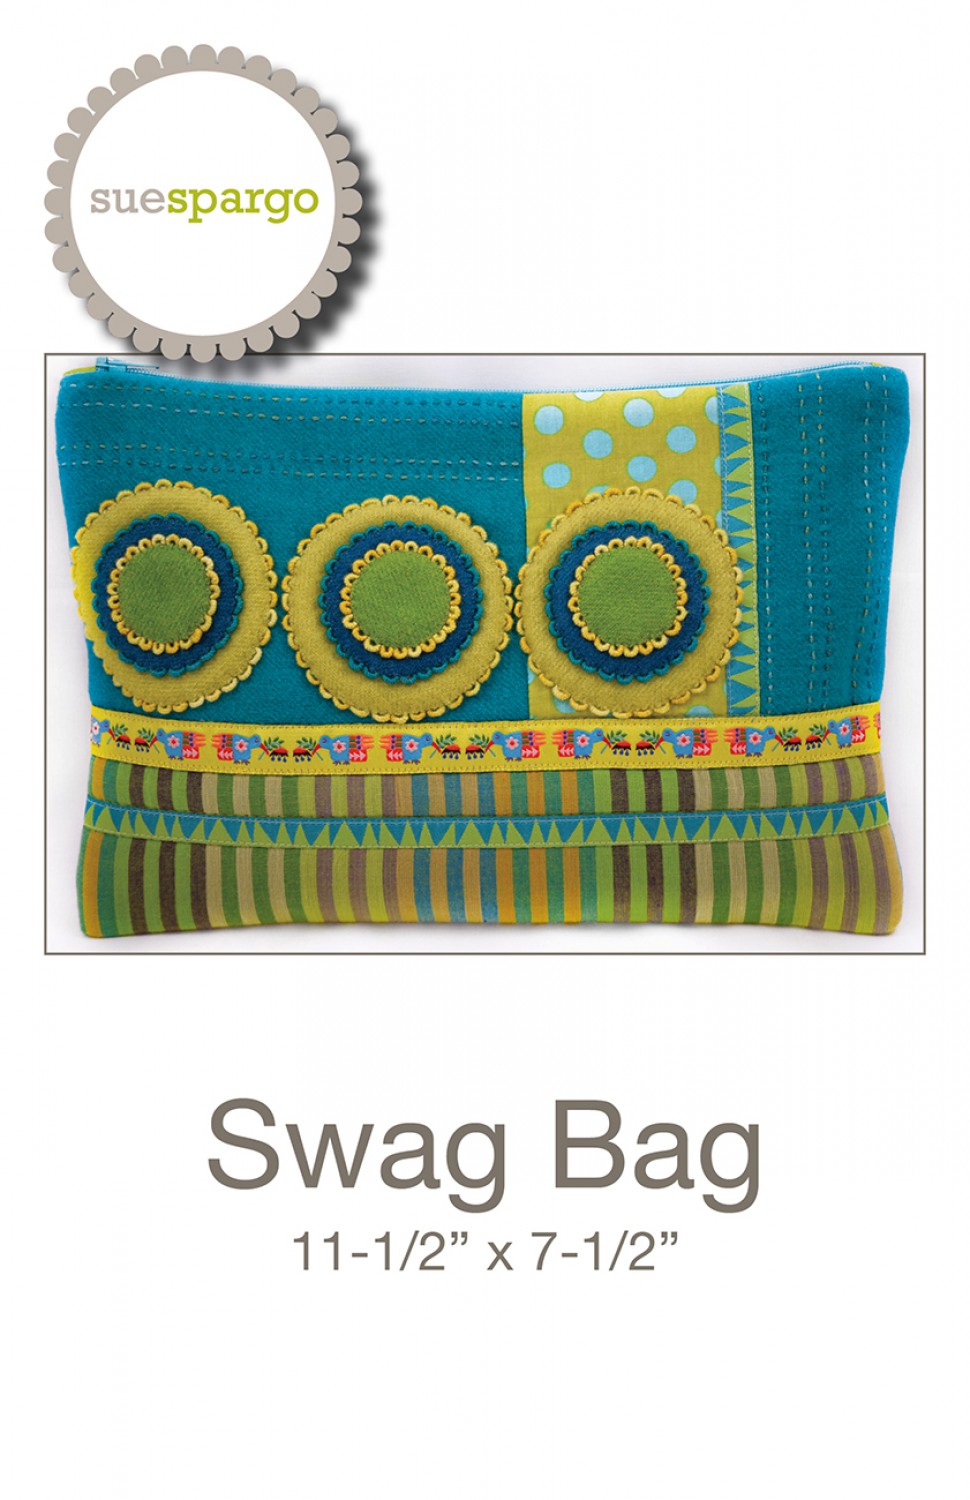 Swag Bag Pattern - Wool Felt Applique - Sue Spargo